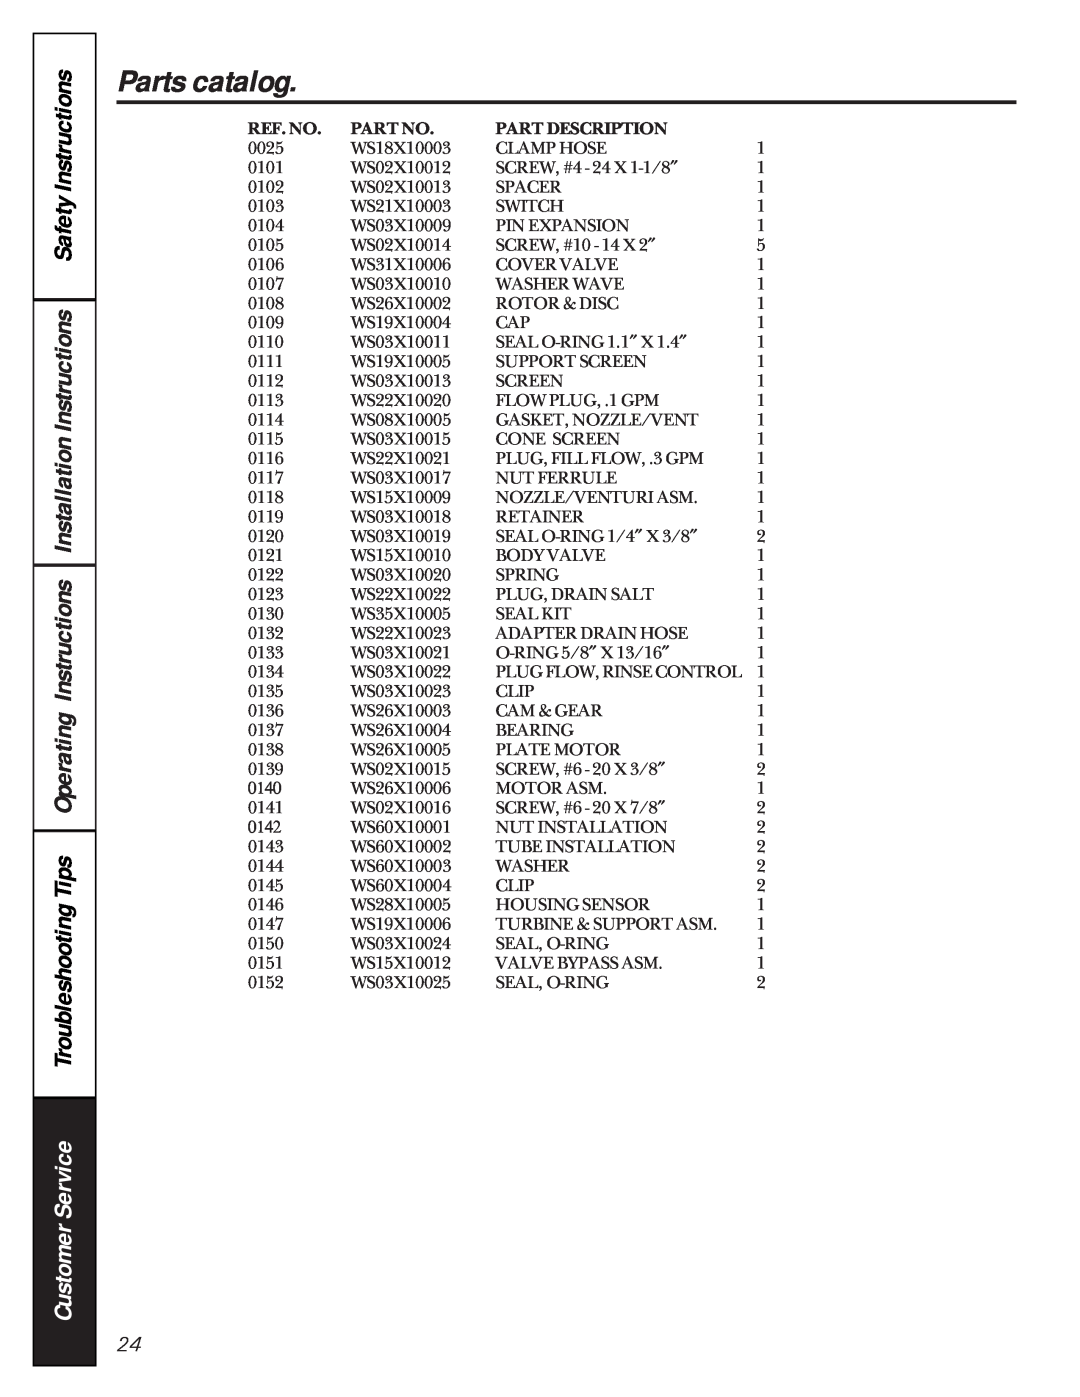 GE 6000A owner manual Parts catalog, Customer Service 